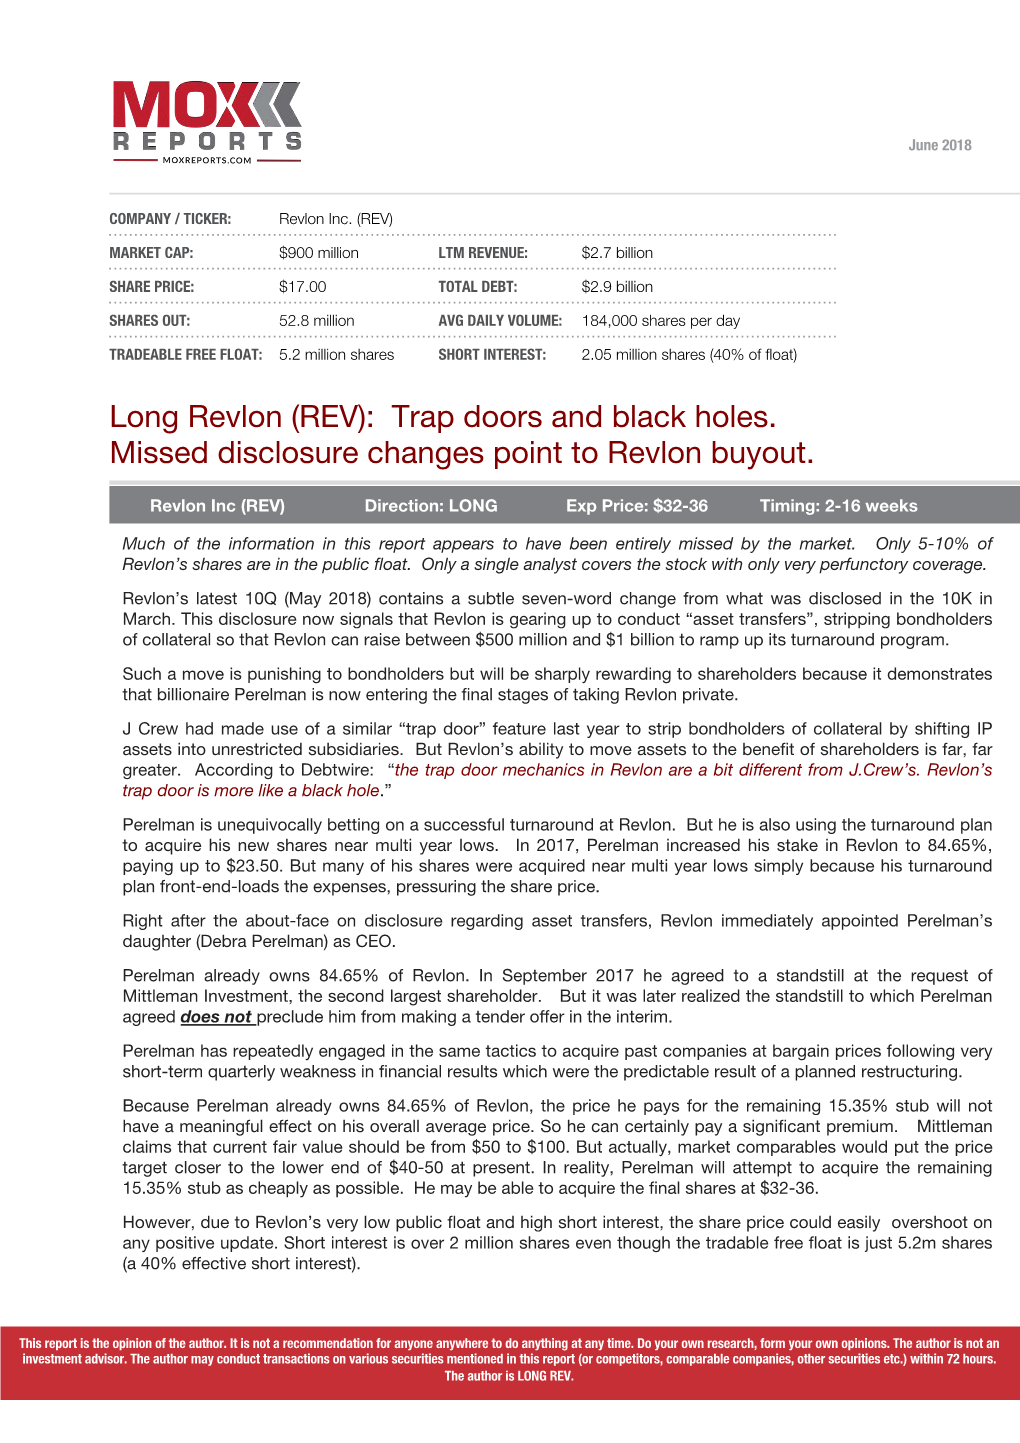 Long Revlon (REV): Trap Doors and Black Holes